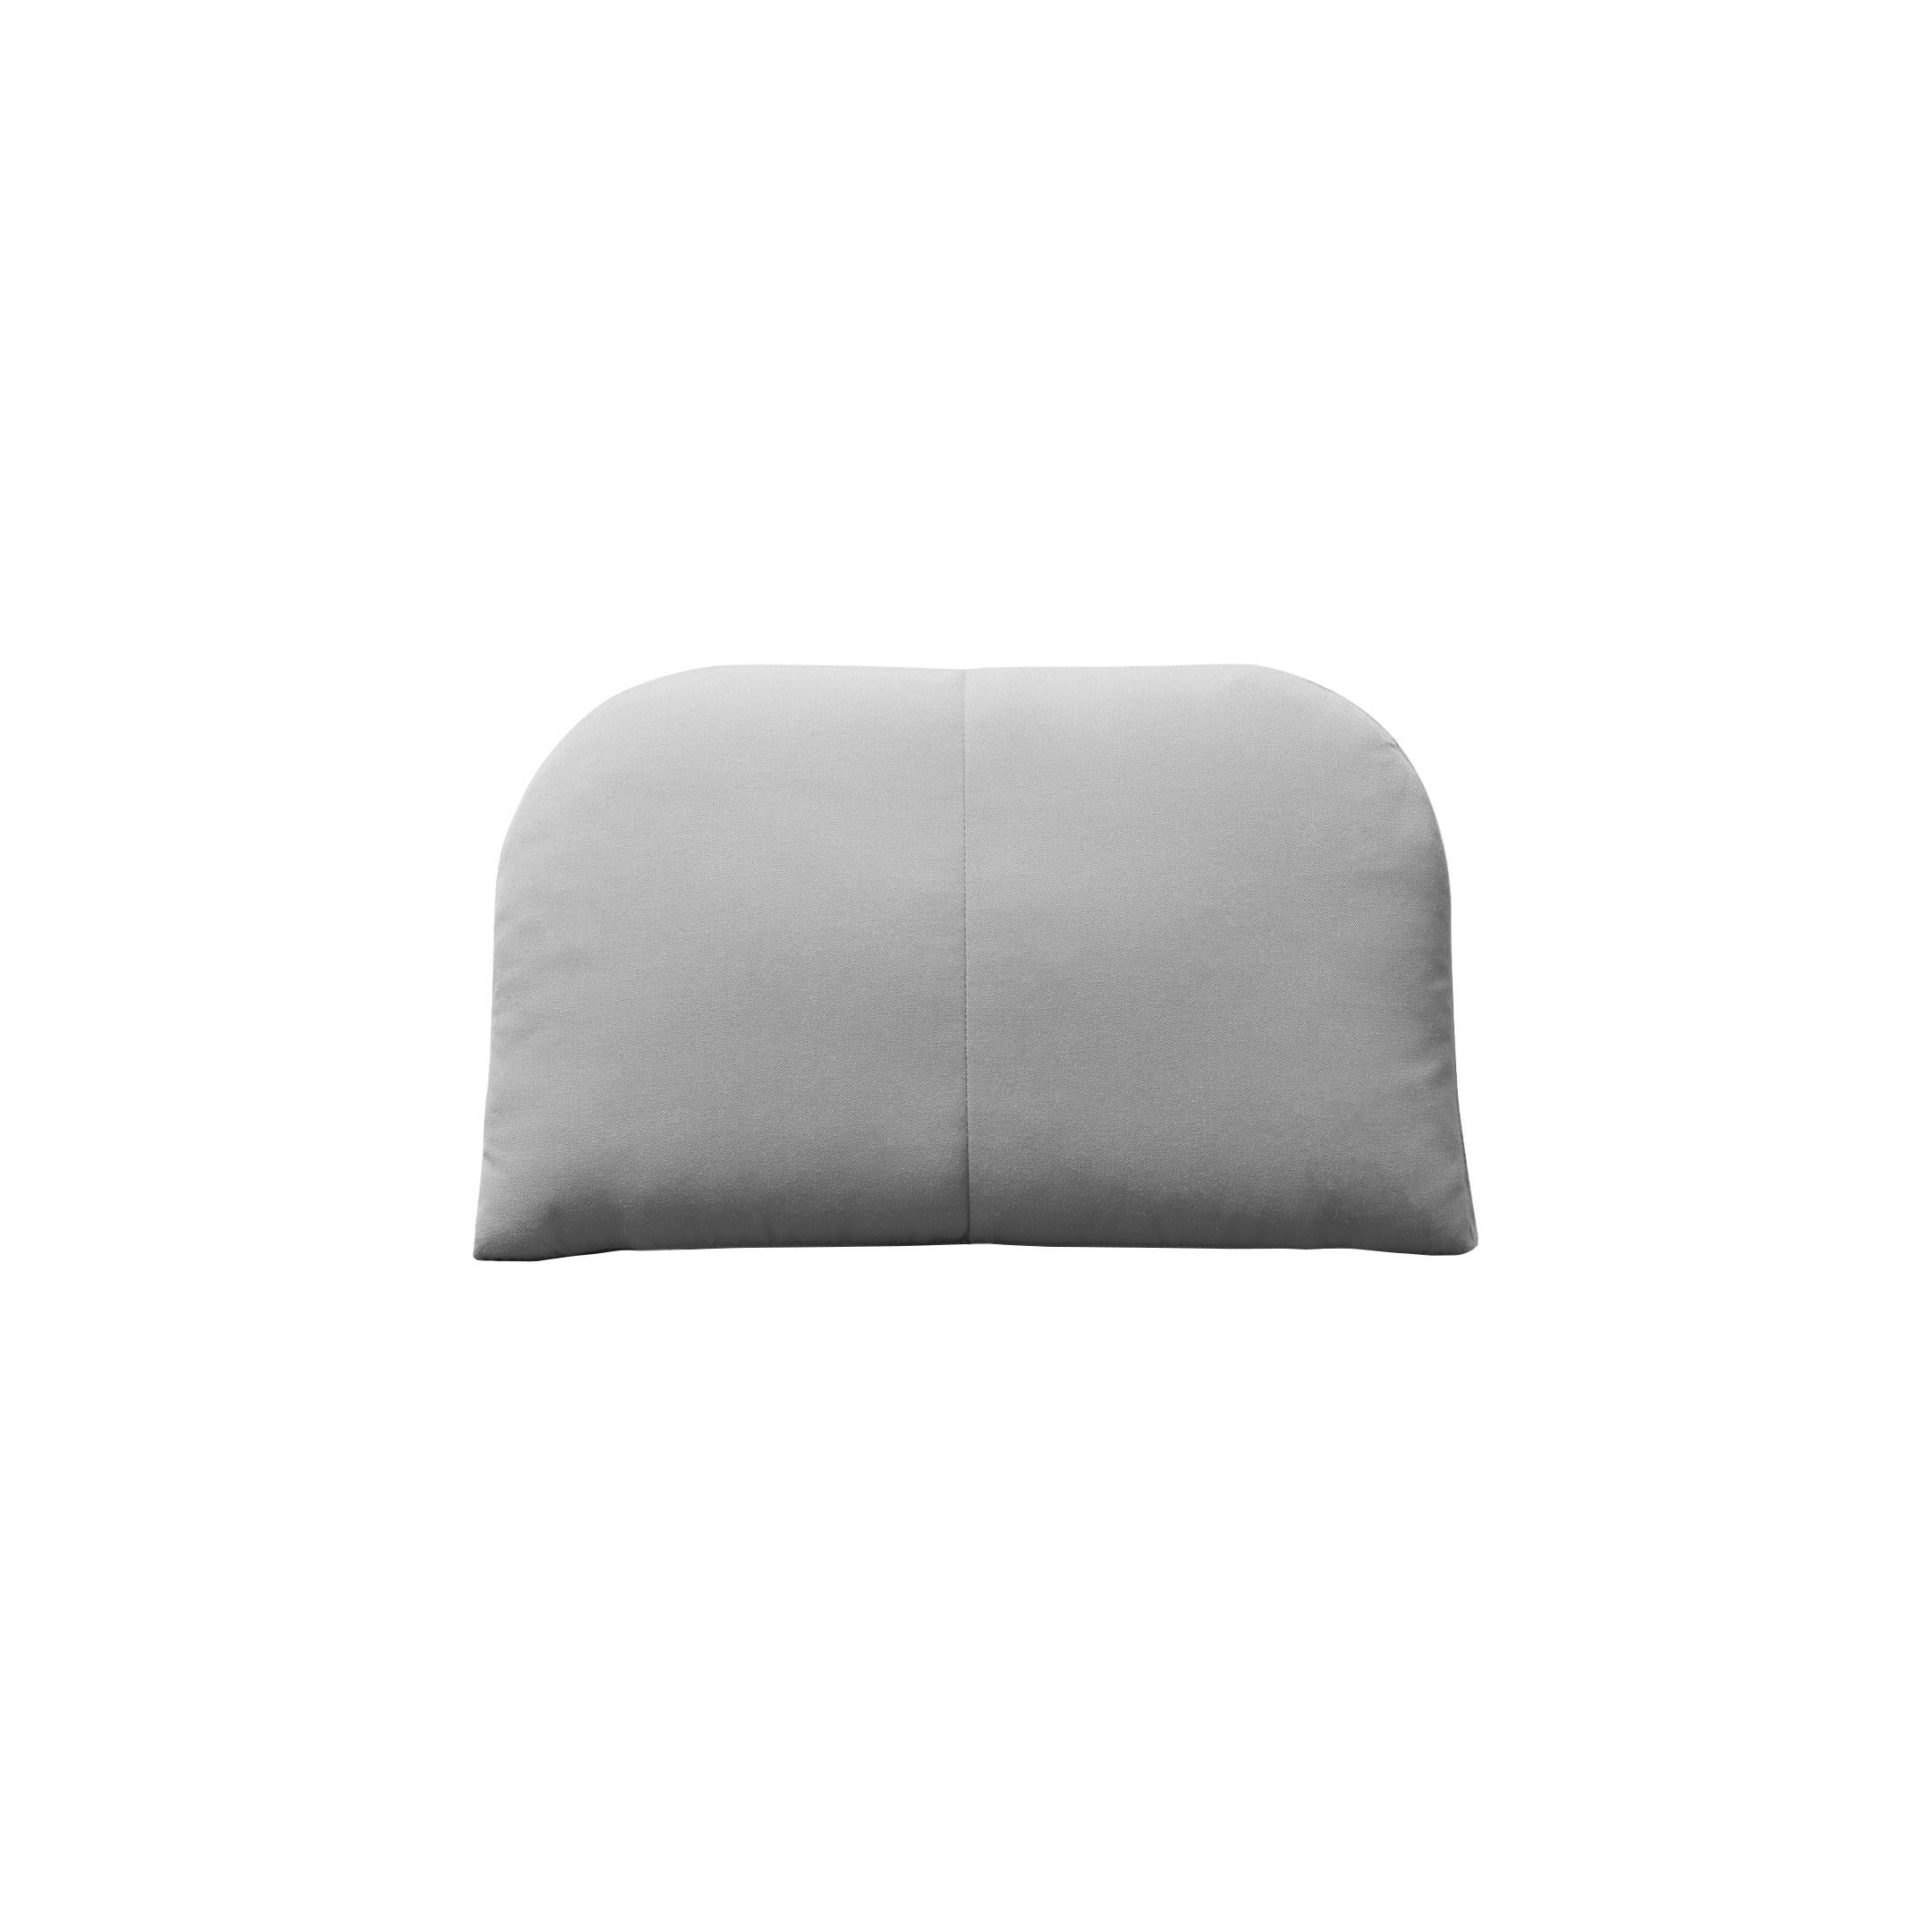 Woven Bend Goods - Arc Throw Pillow in Burgundy Sunbrella For Sale